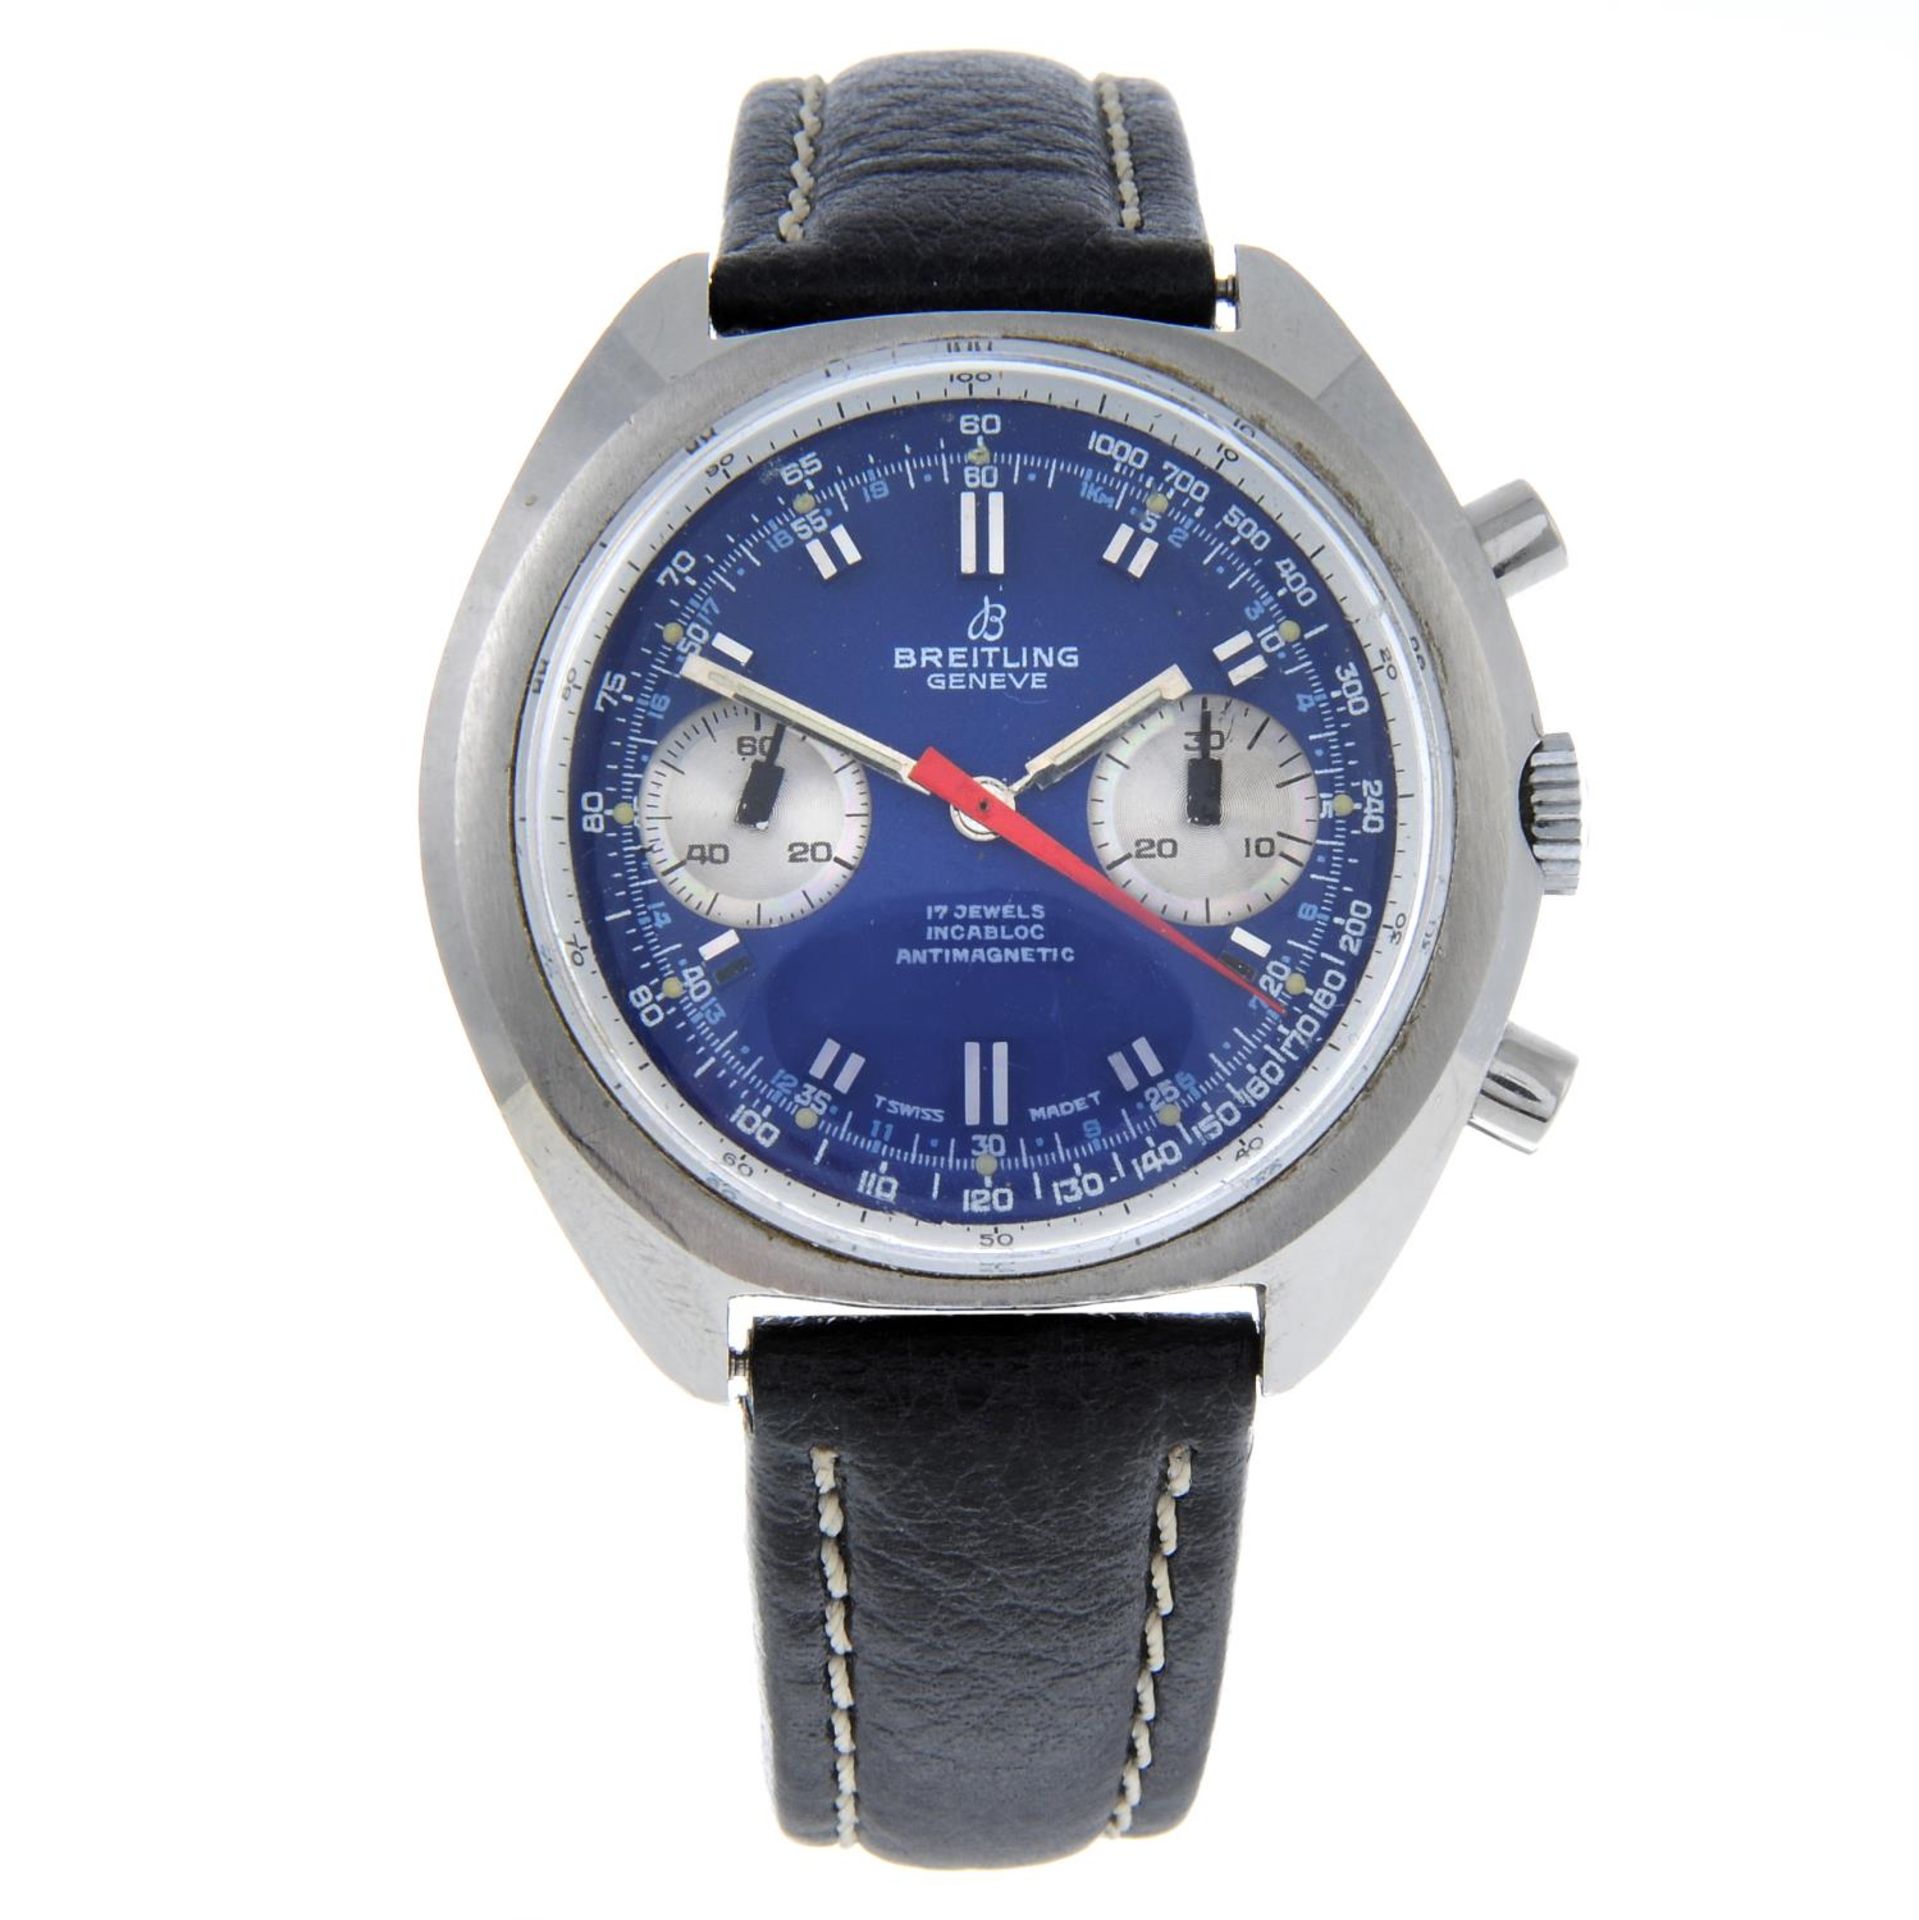 BREITLING - a gentleman's chronograph wrist watch.